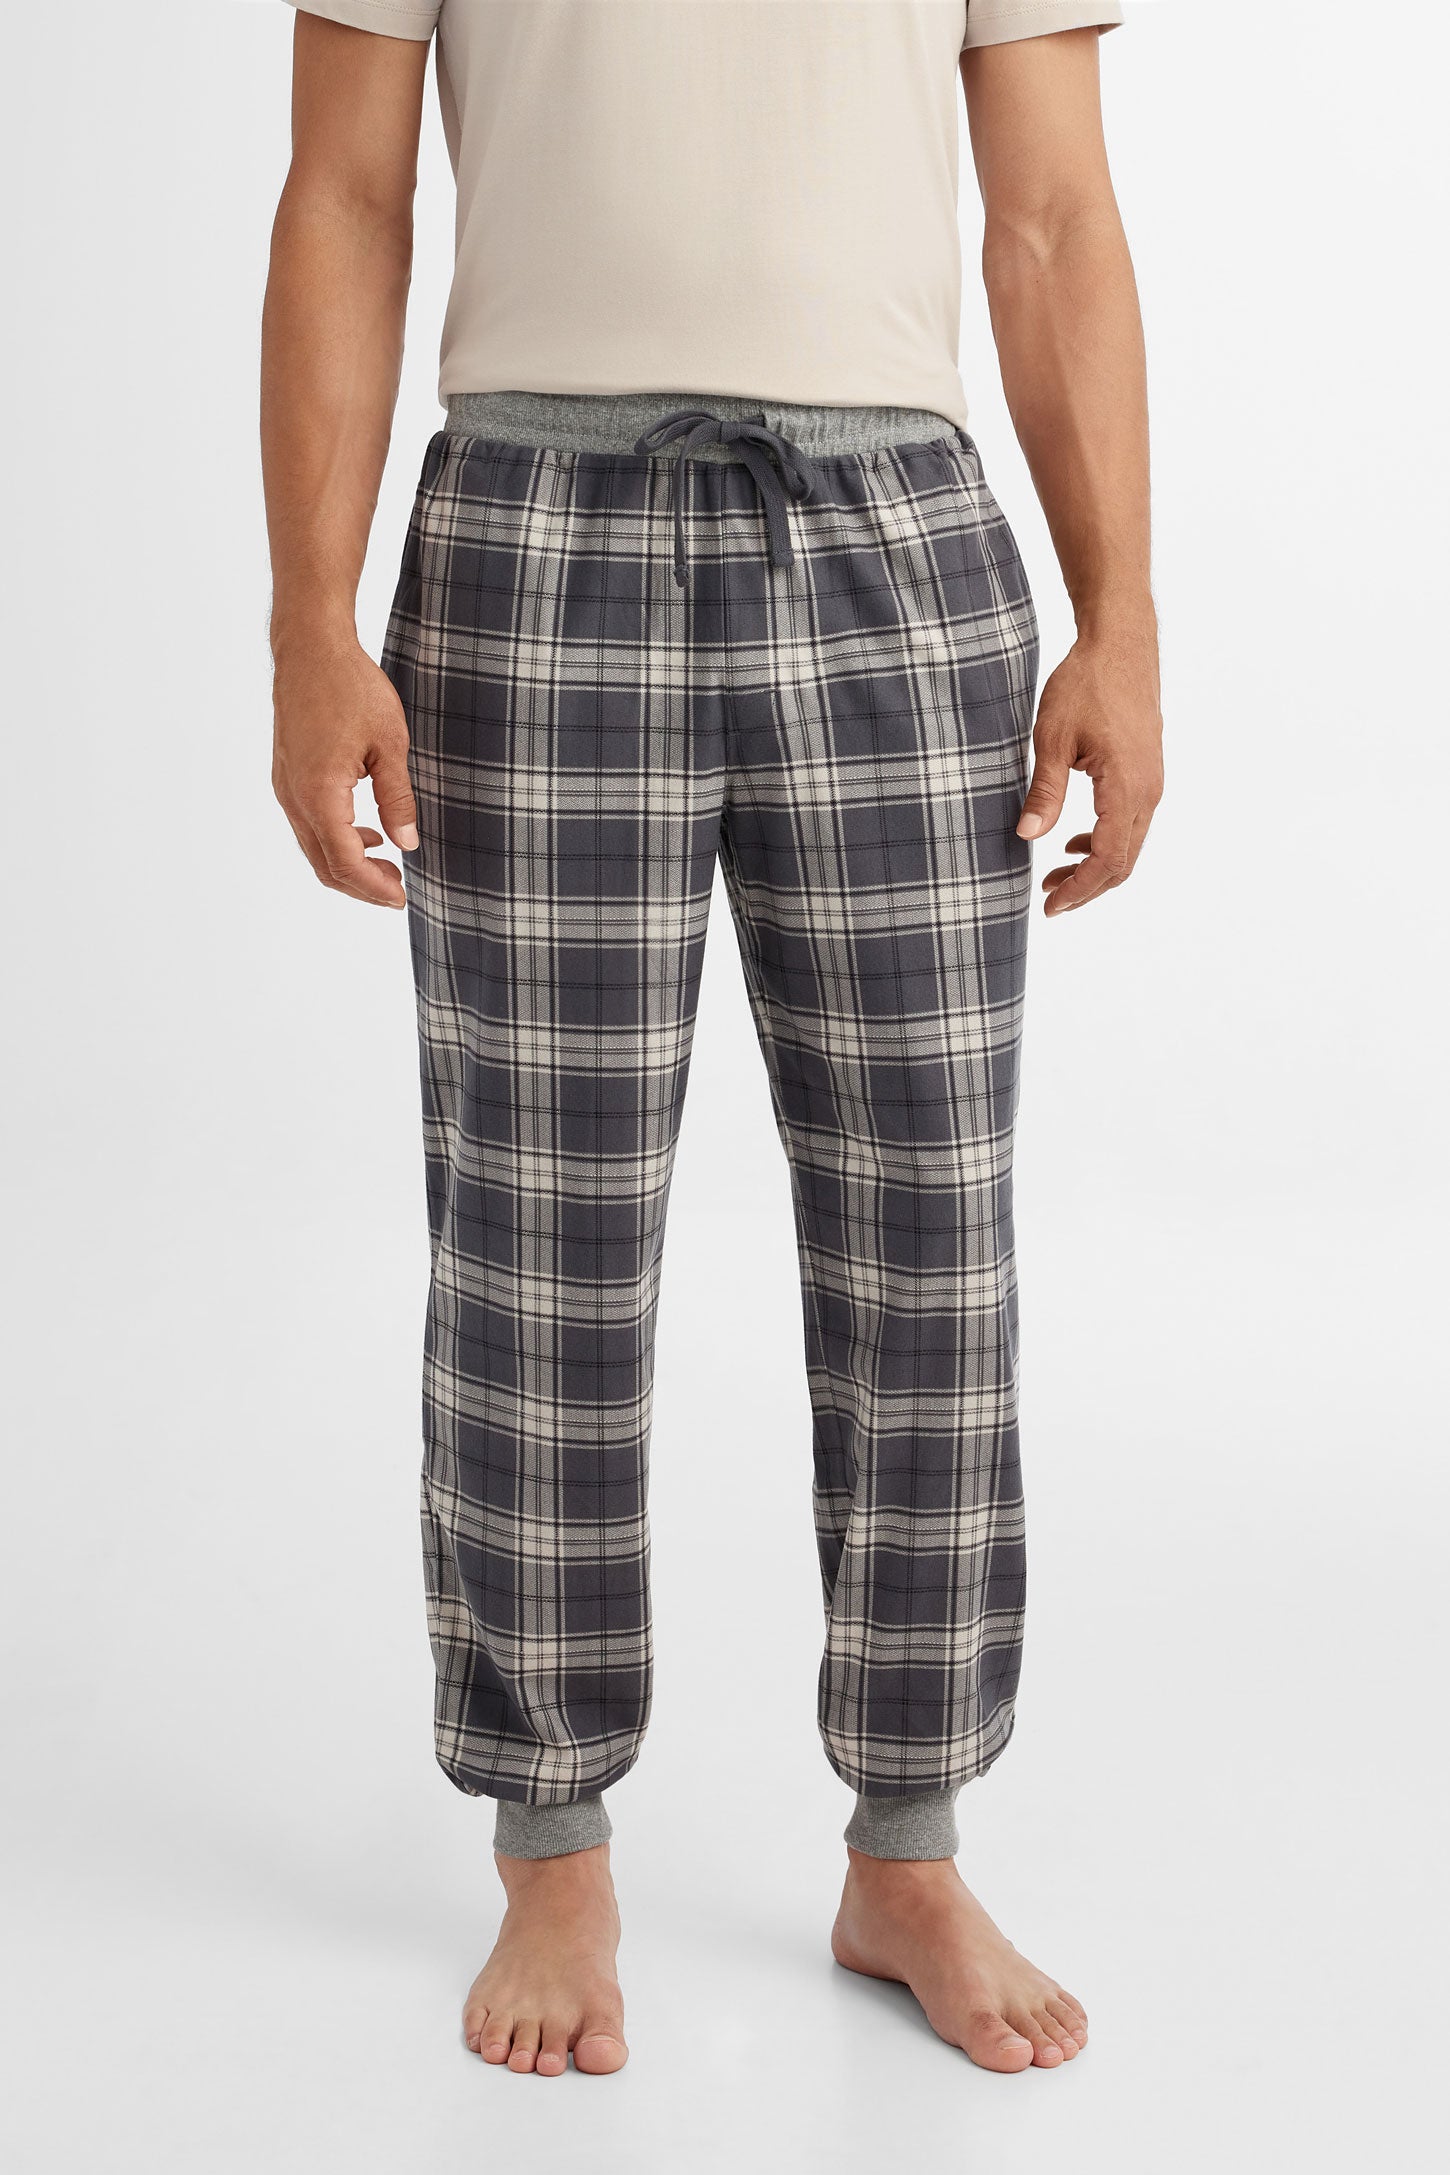 Pantalon jogger pyjama  - Homme && CHAMEAU